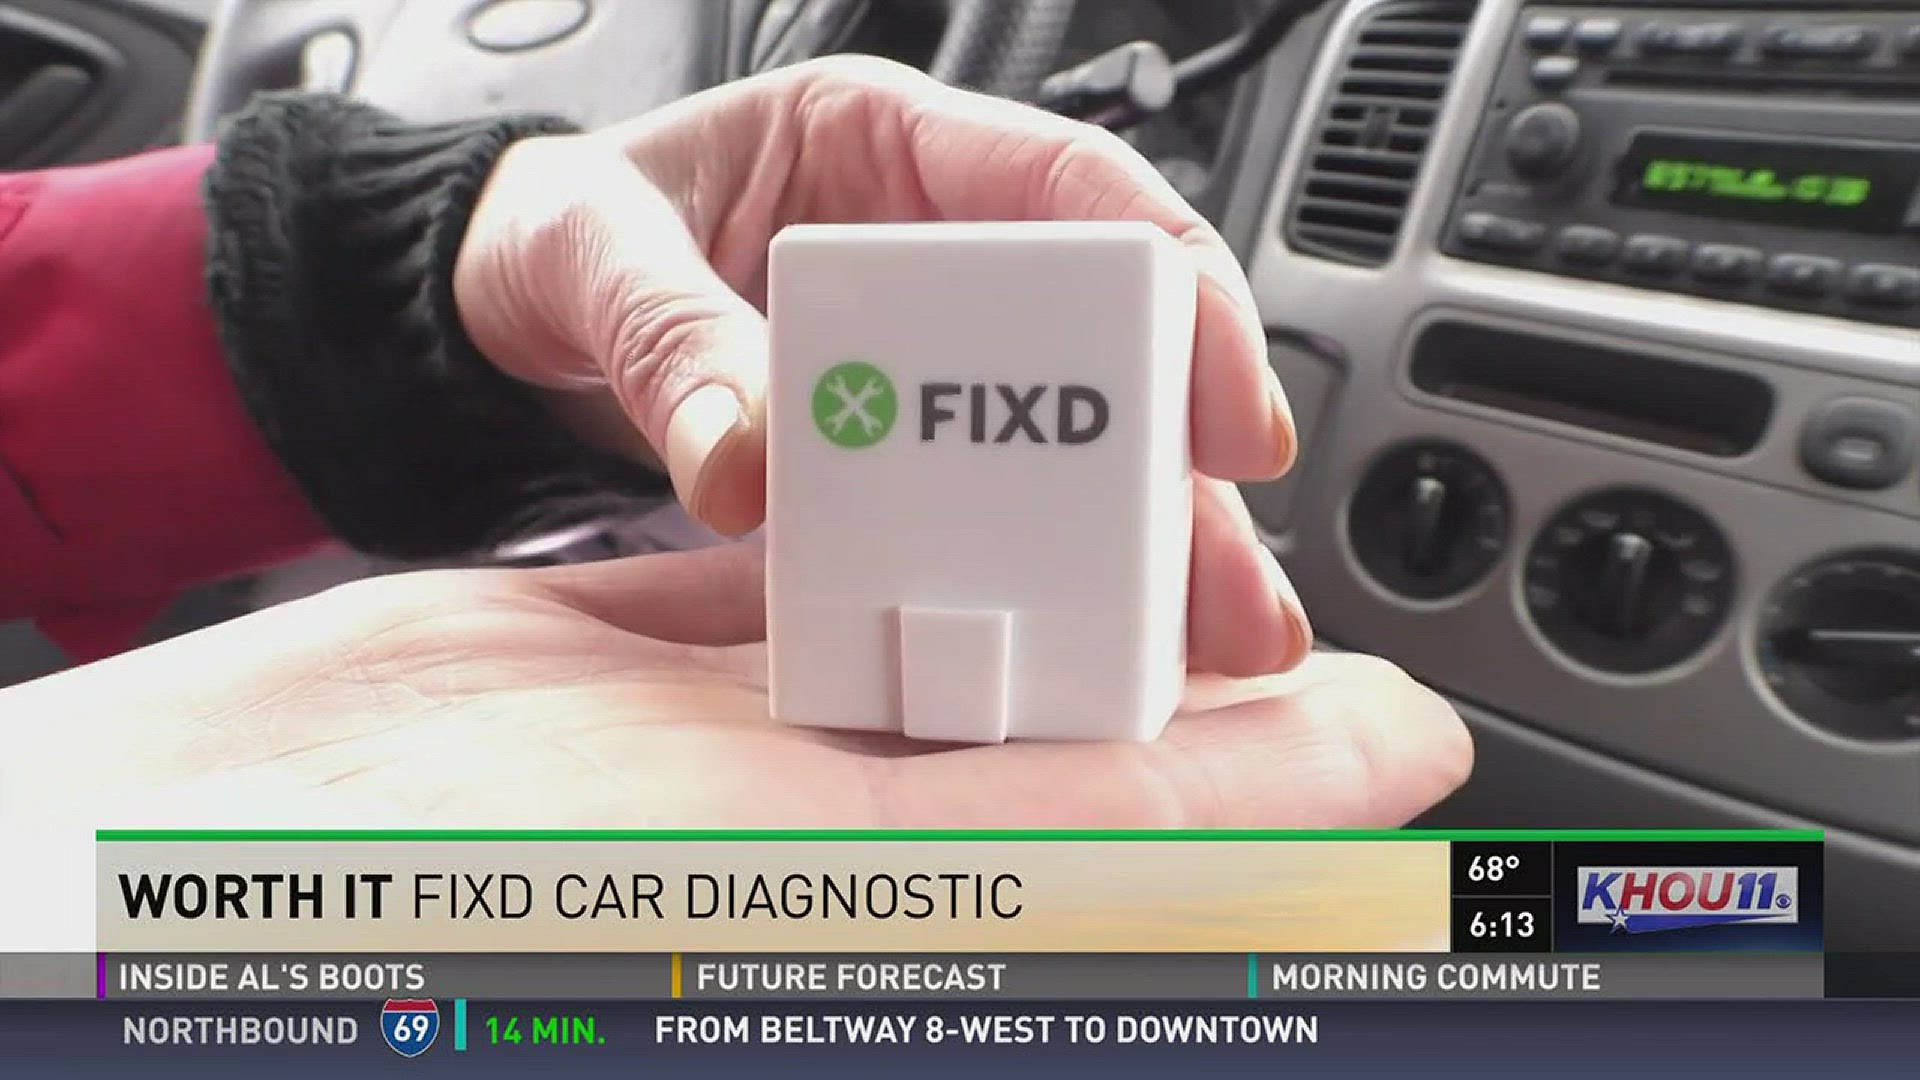 Tiffany Craig tries a car health monitor called FIXD to determine - is it worth it?